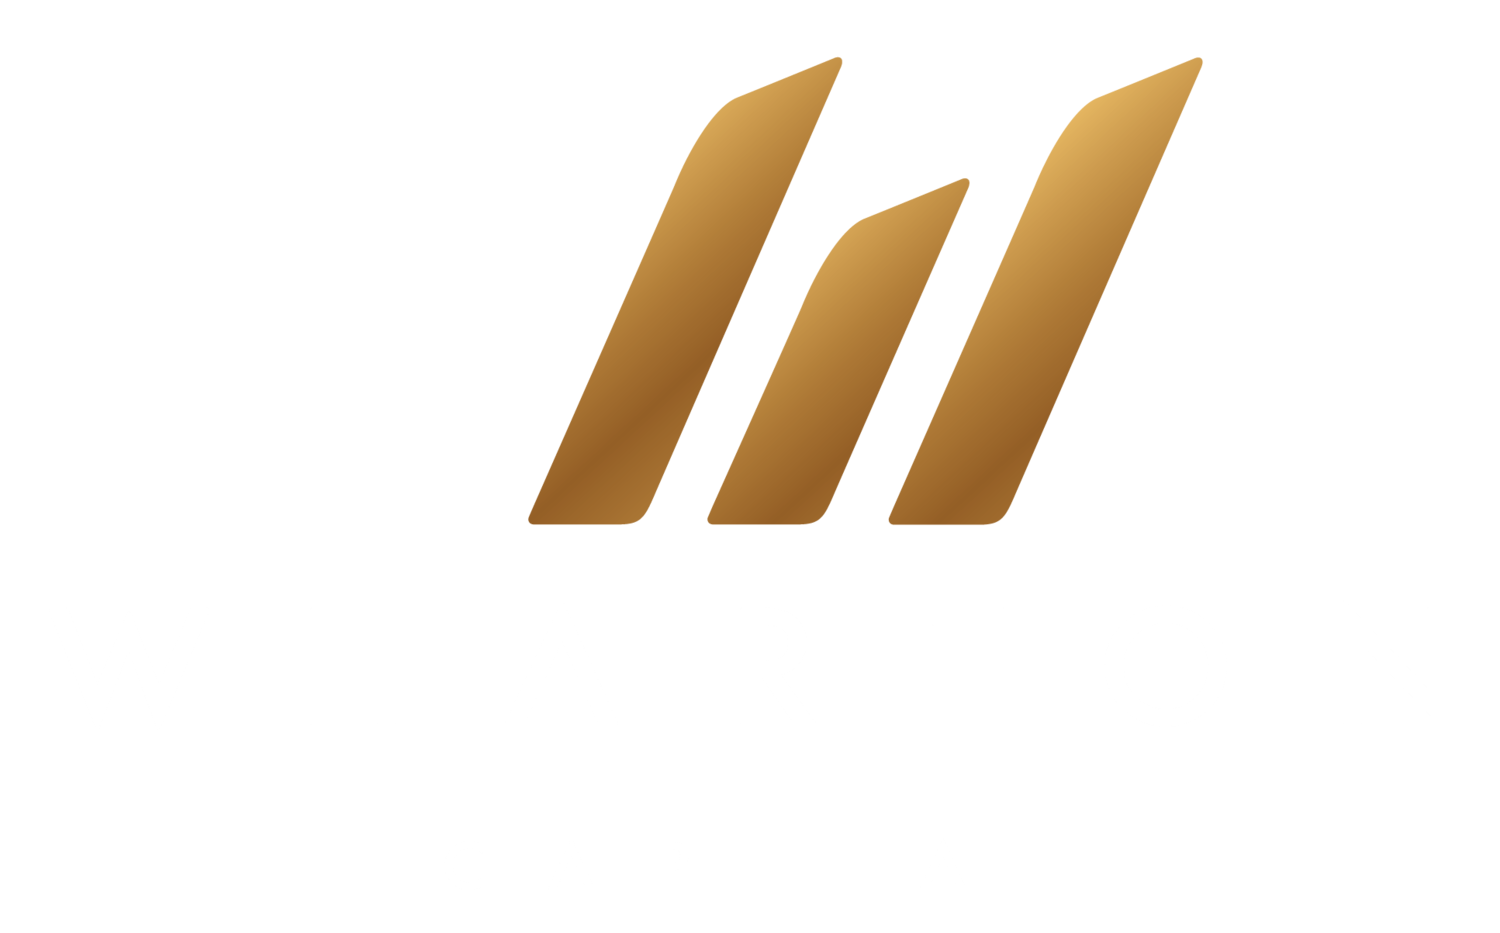 Wharton Capital Limited